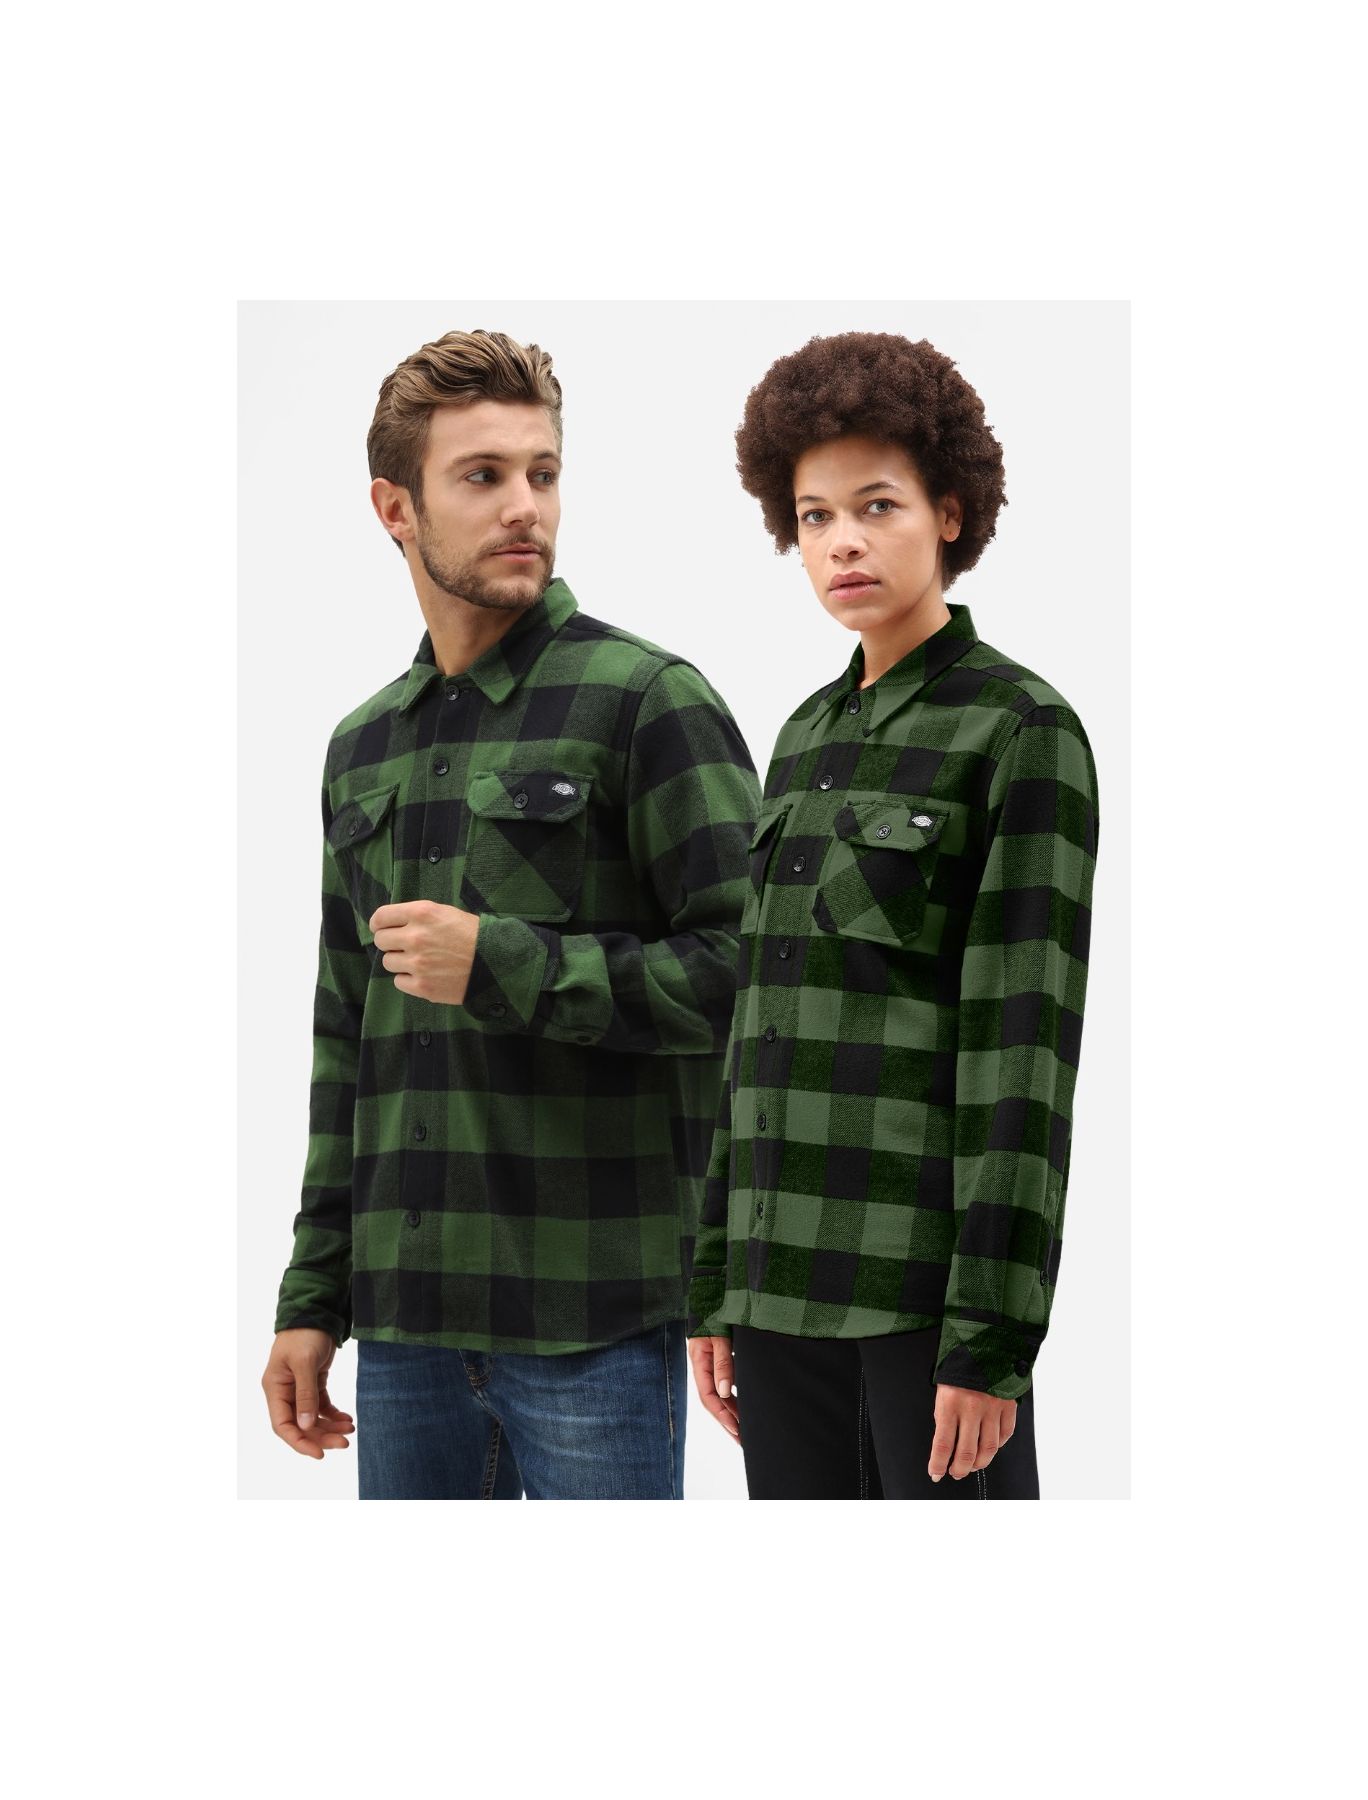 blive irriteret emulering chance Buy Dickies Sacramento Relaxed Long Sleeve shirt Green - Scandinavian  Fashion Store